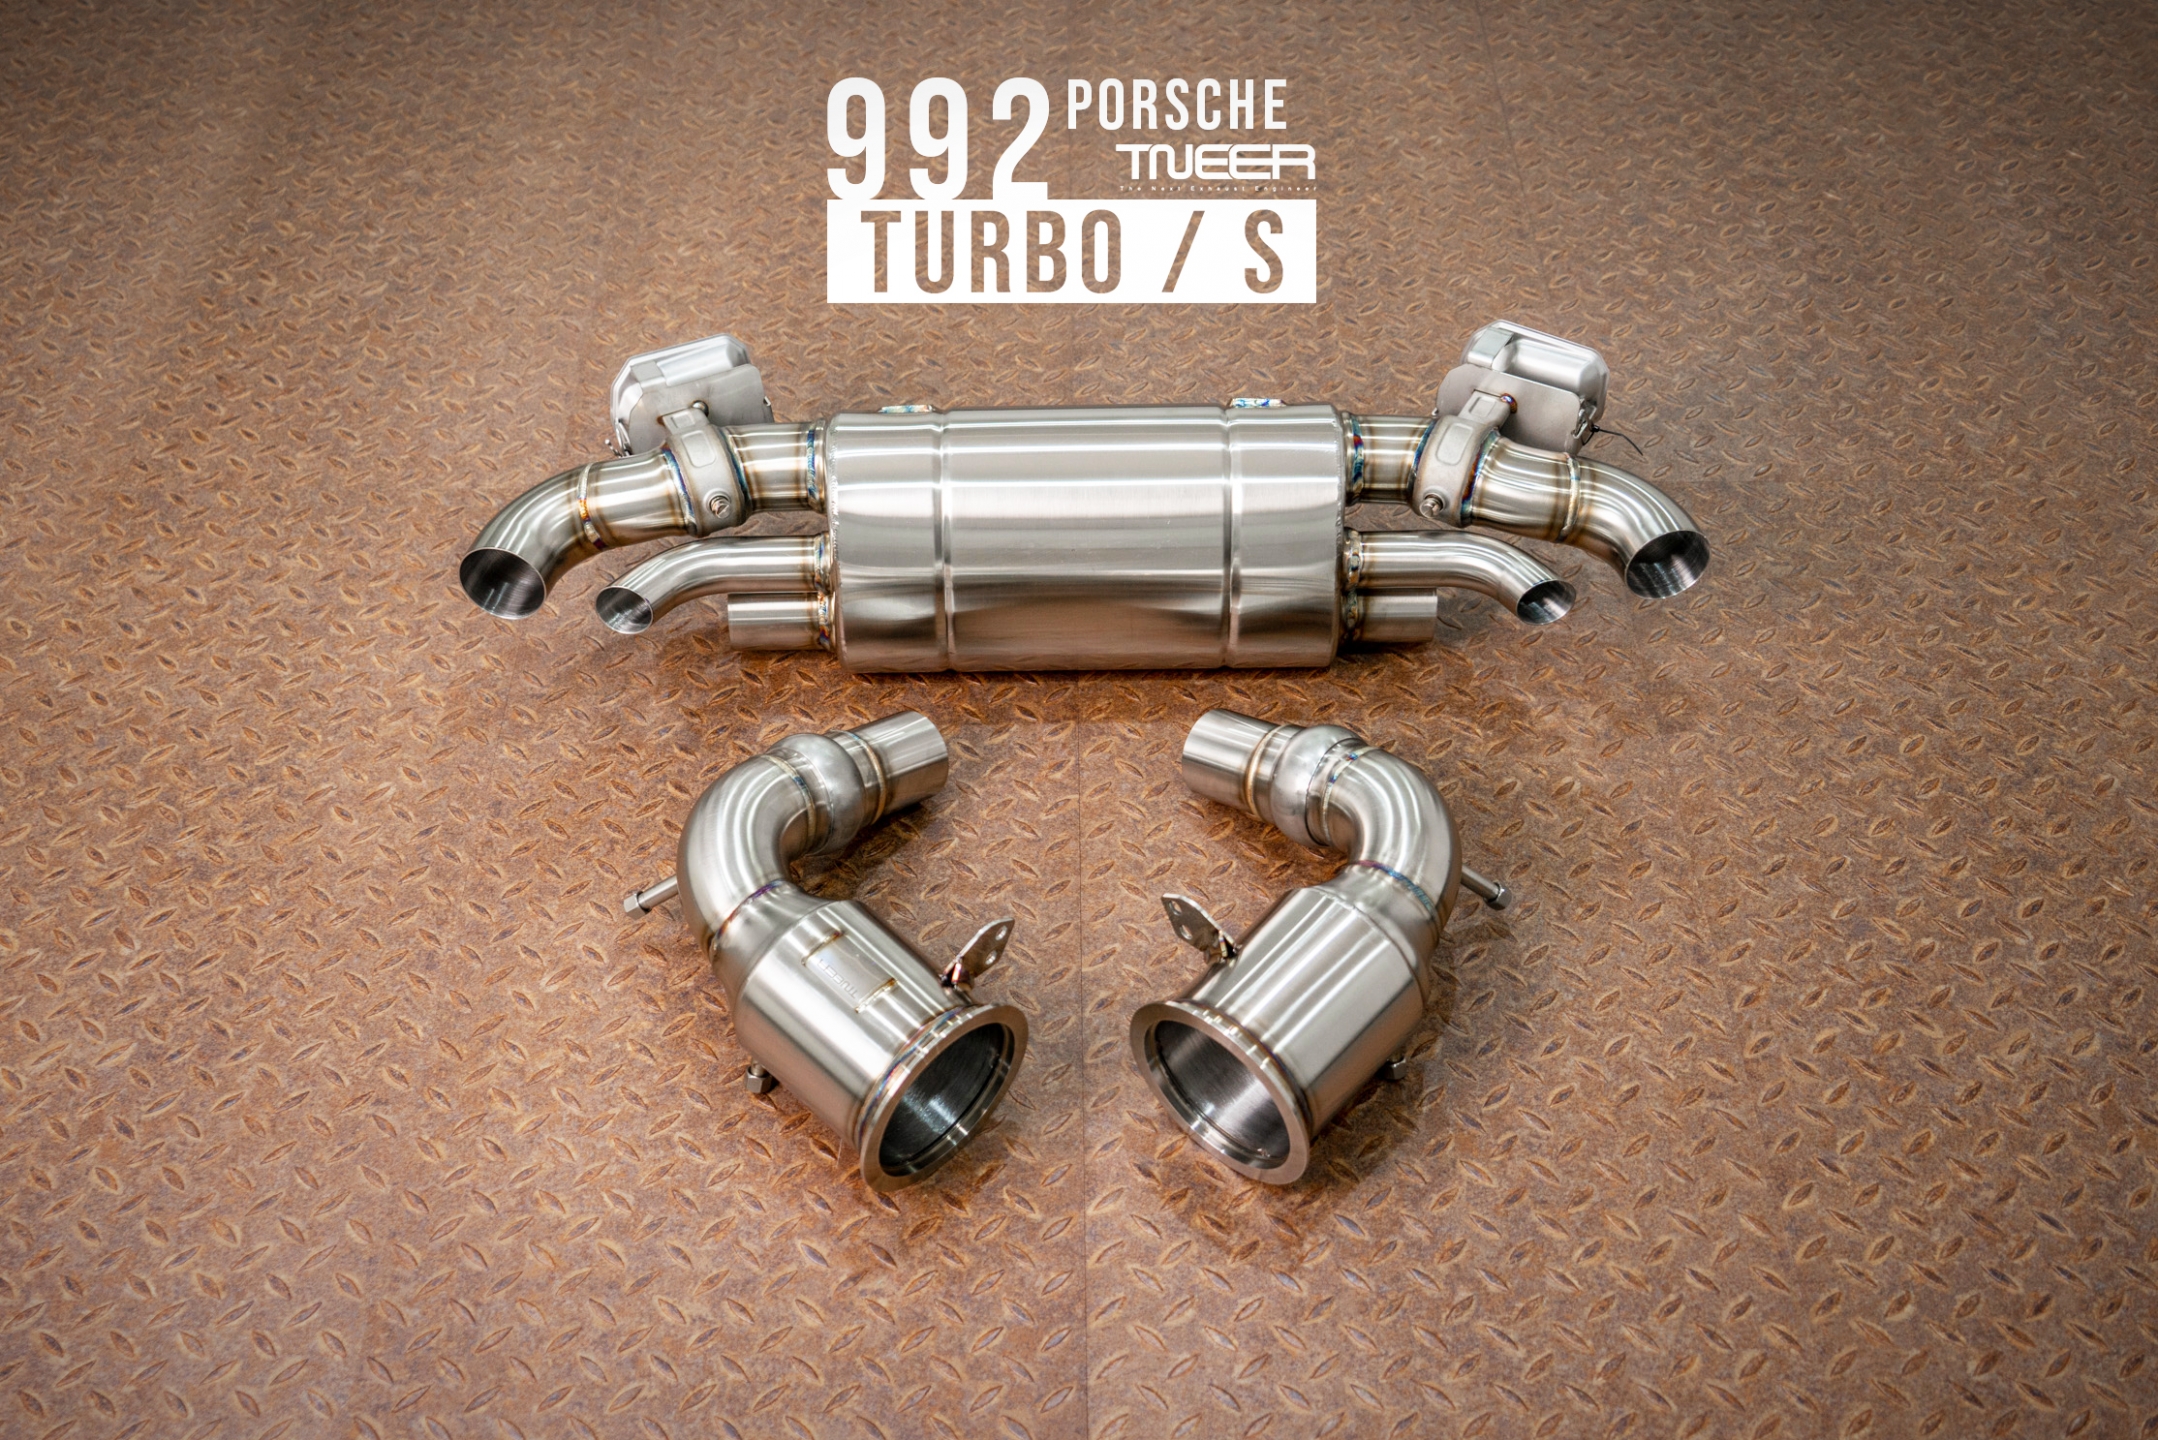 Porsche 992 Turbo / S Titanium Special Edition TNEER Race Exhaust System